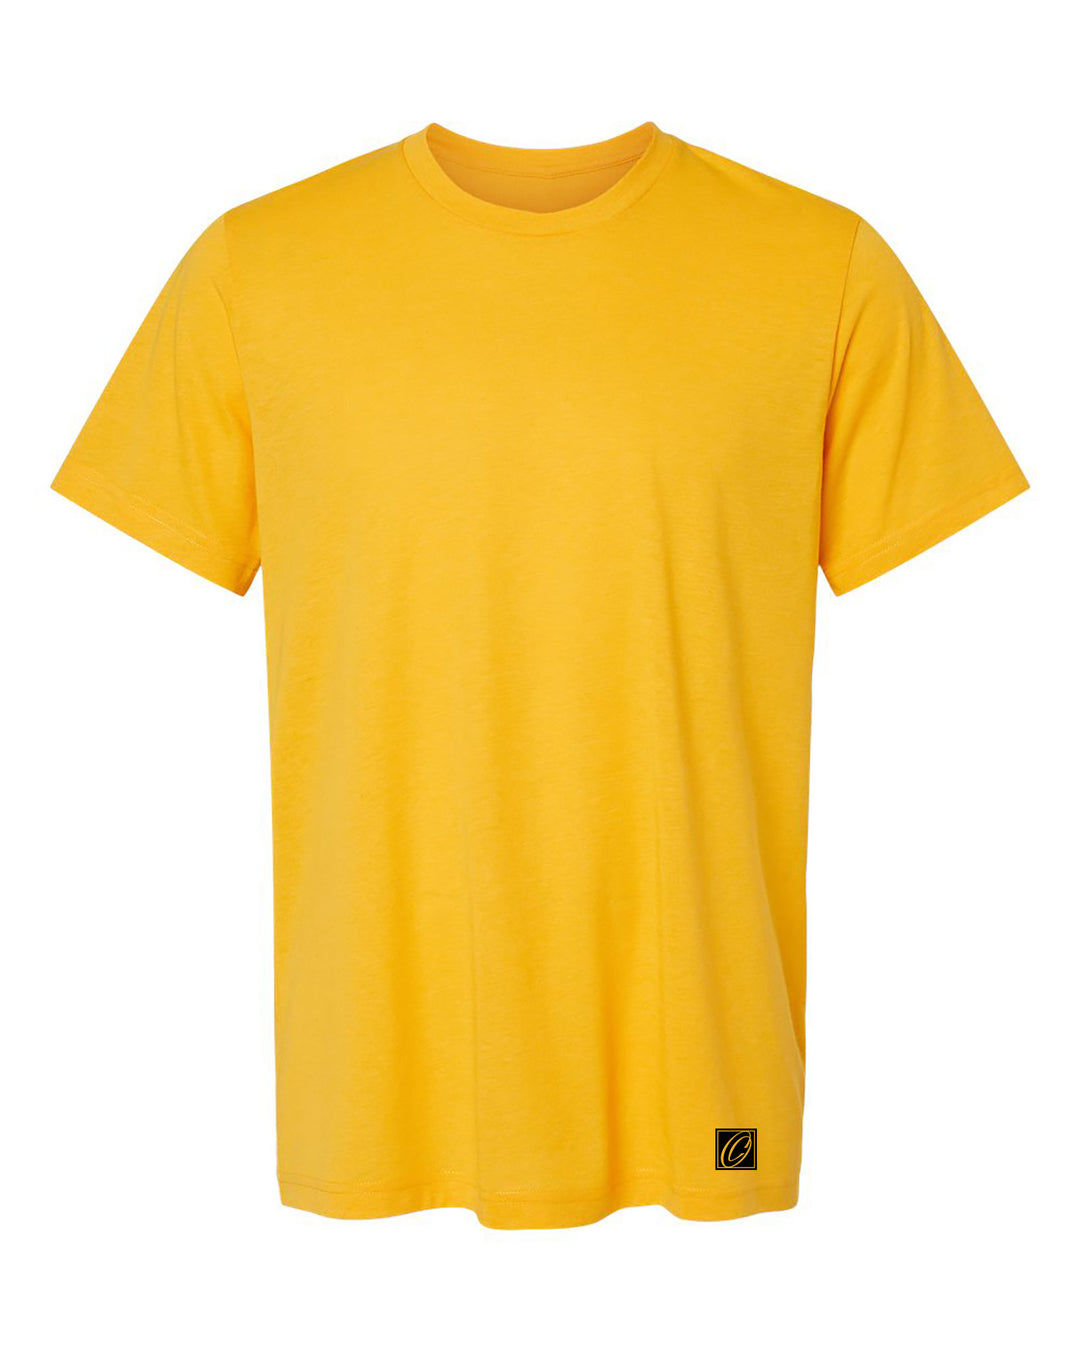 Bella Canvas Adult Triblend Crew Neck Short Sleeve Tee - Yellow/Orange/Tan - XS-XL